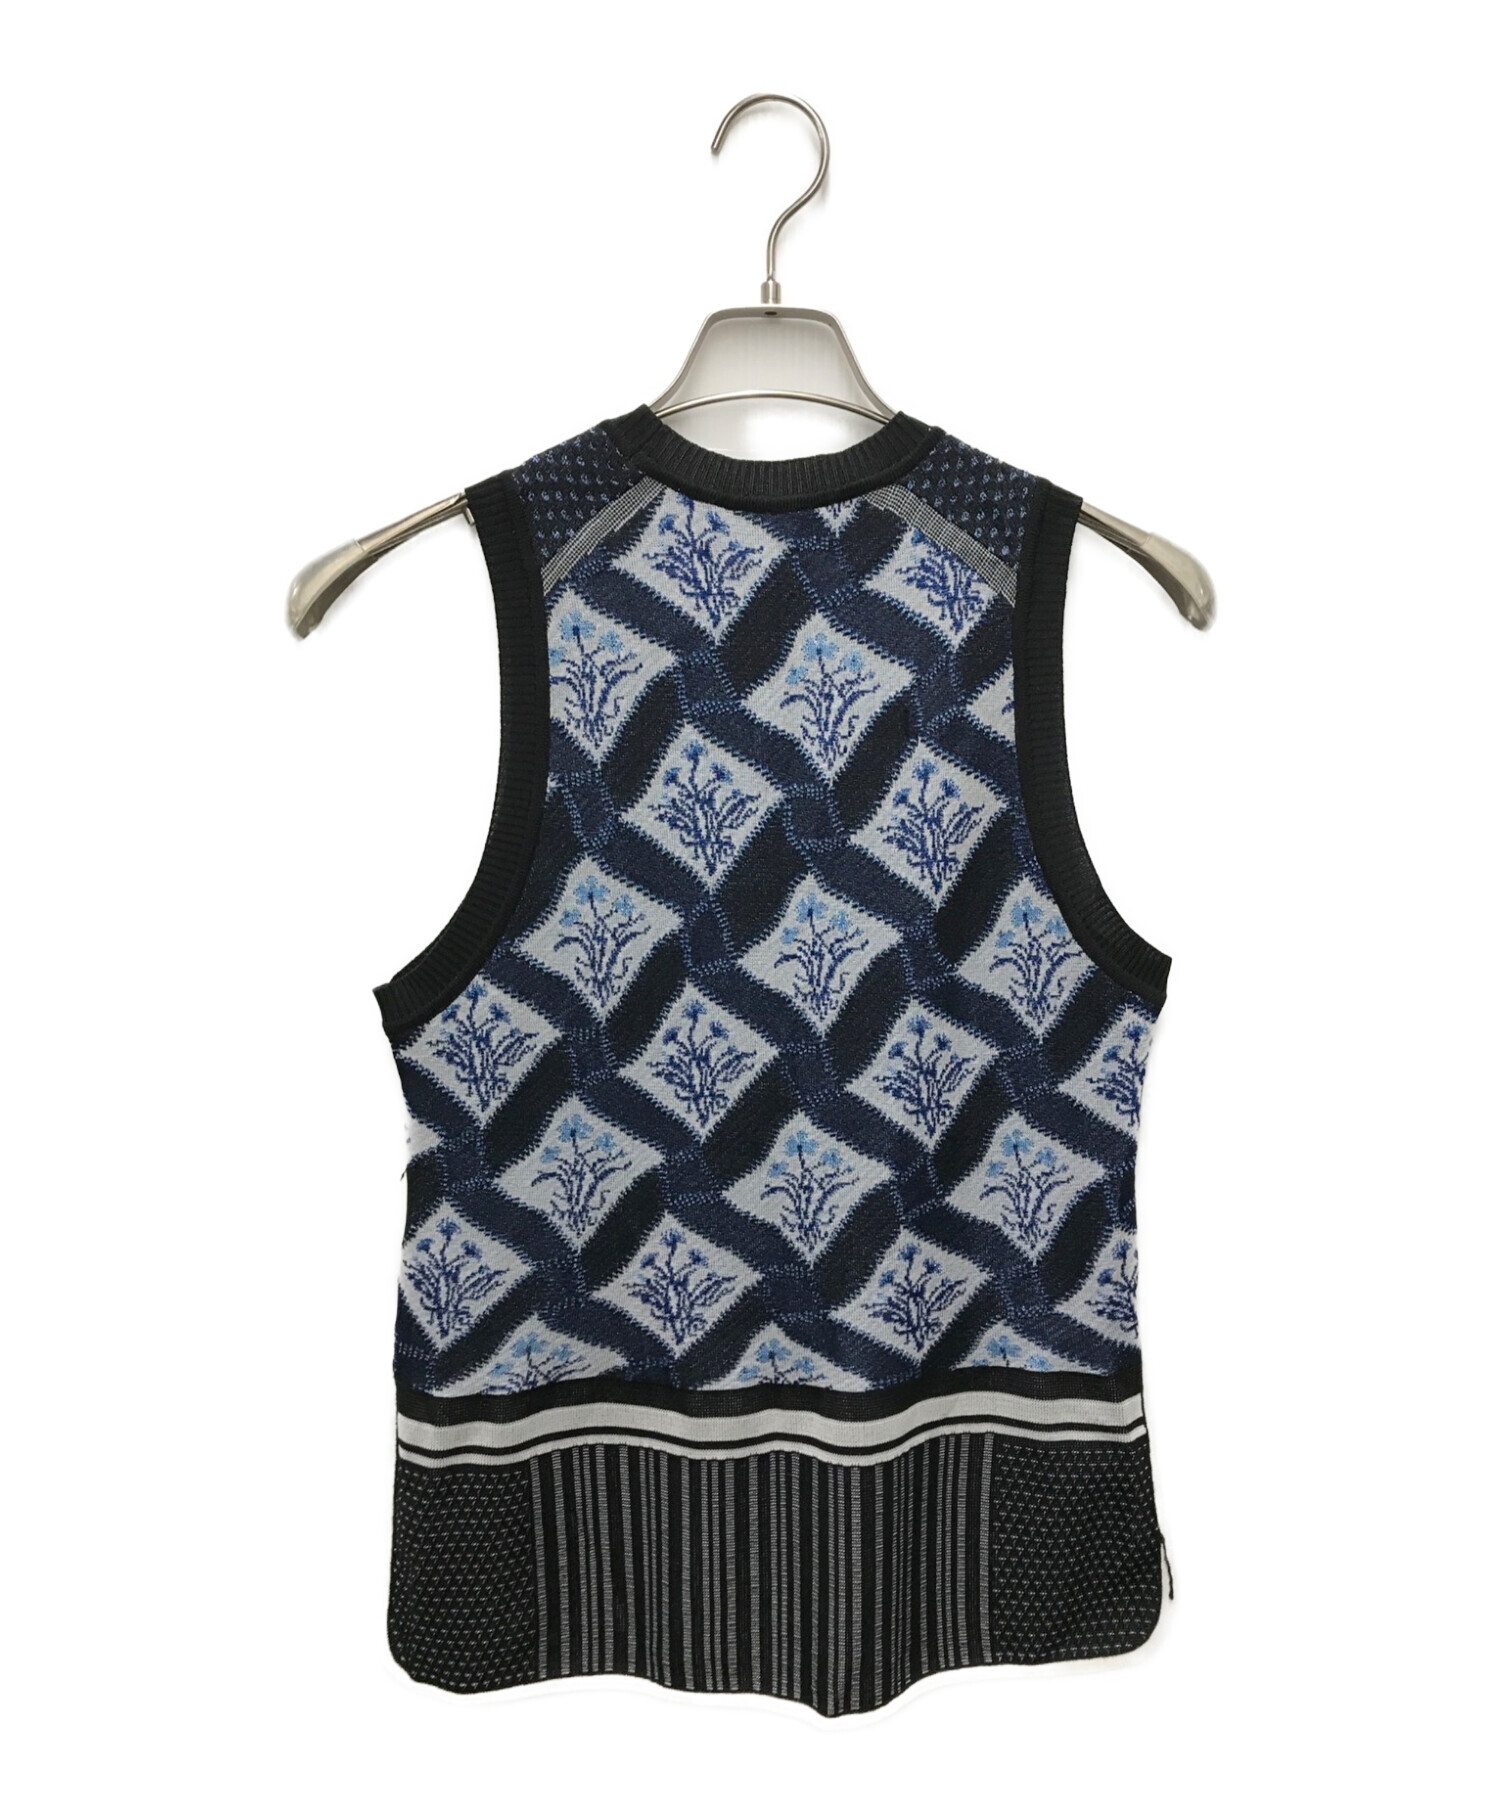 Mame Kurogouchi (マメクロゴウチ) Floral Checquered Knitted Pullover ノースリーブニット  ブラック×ブルー サイズ:1